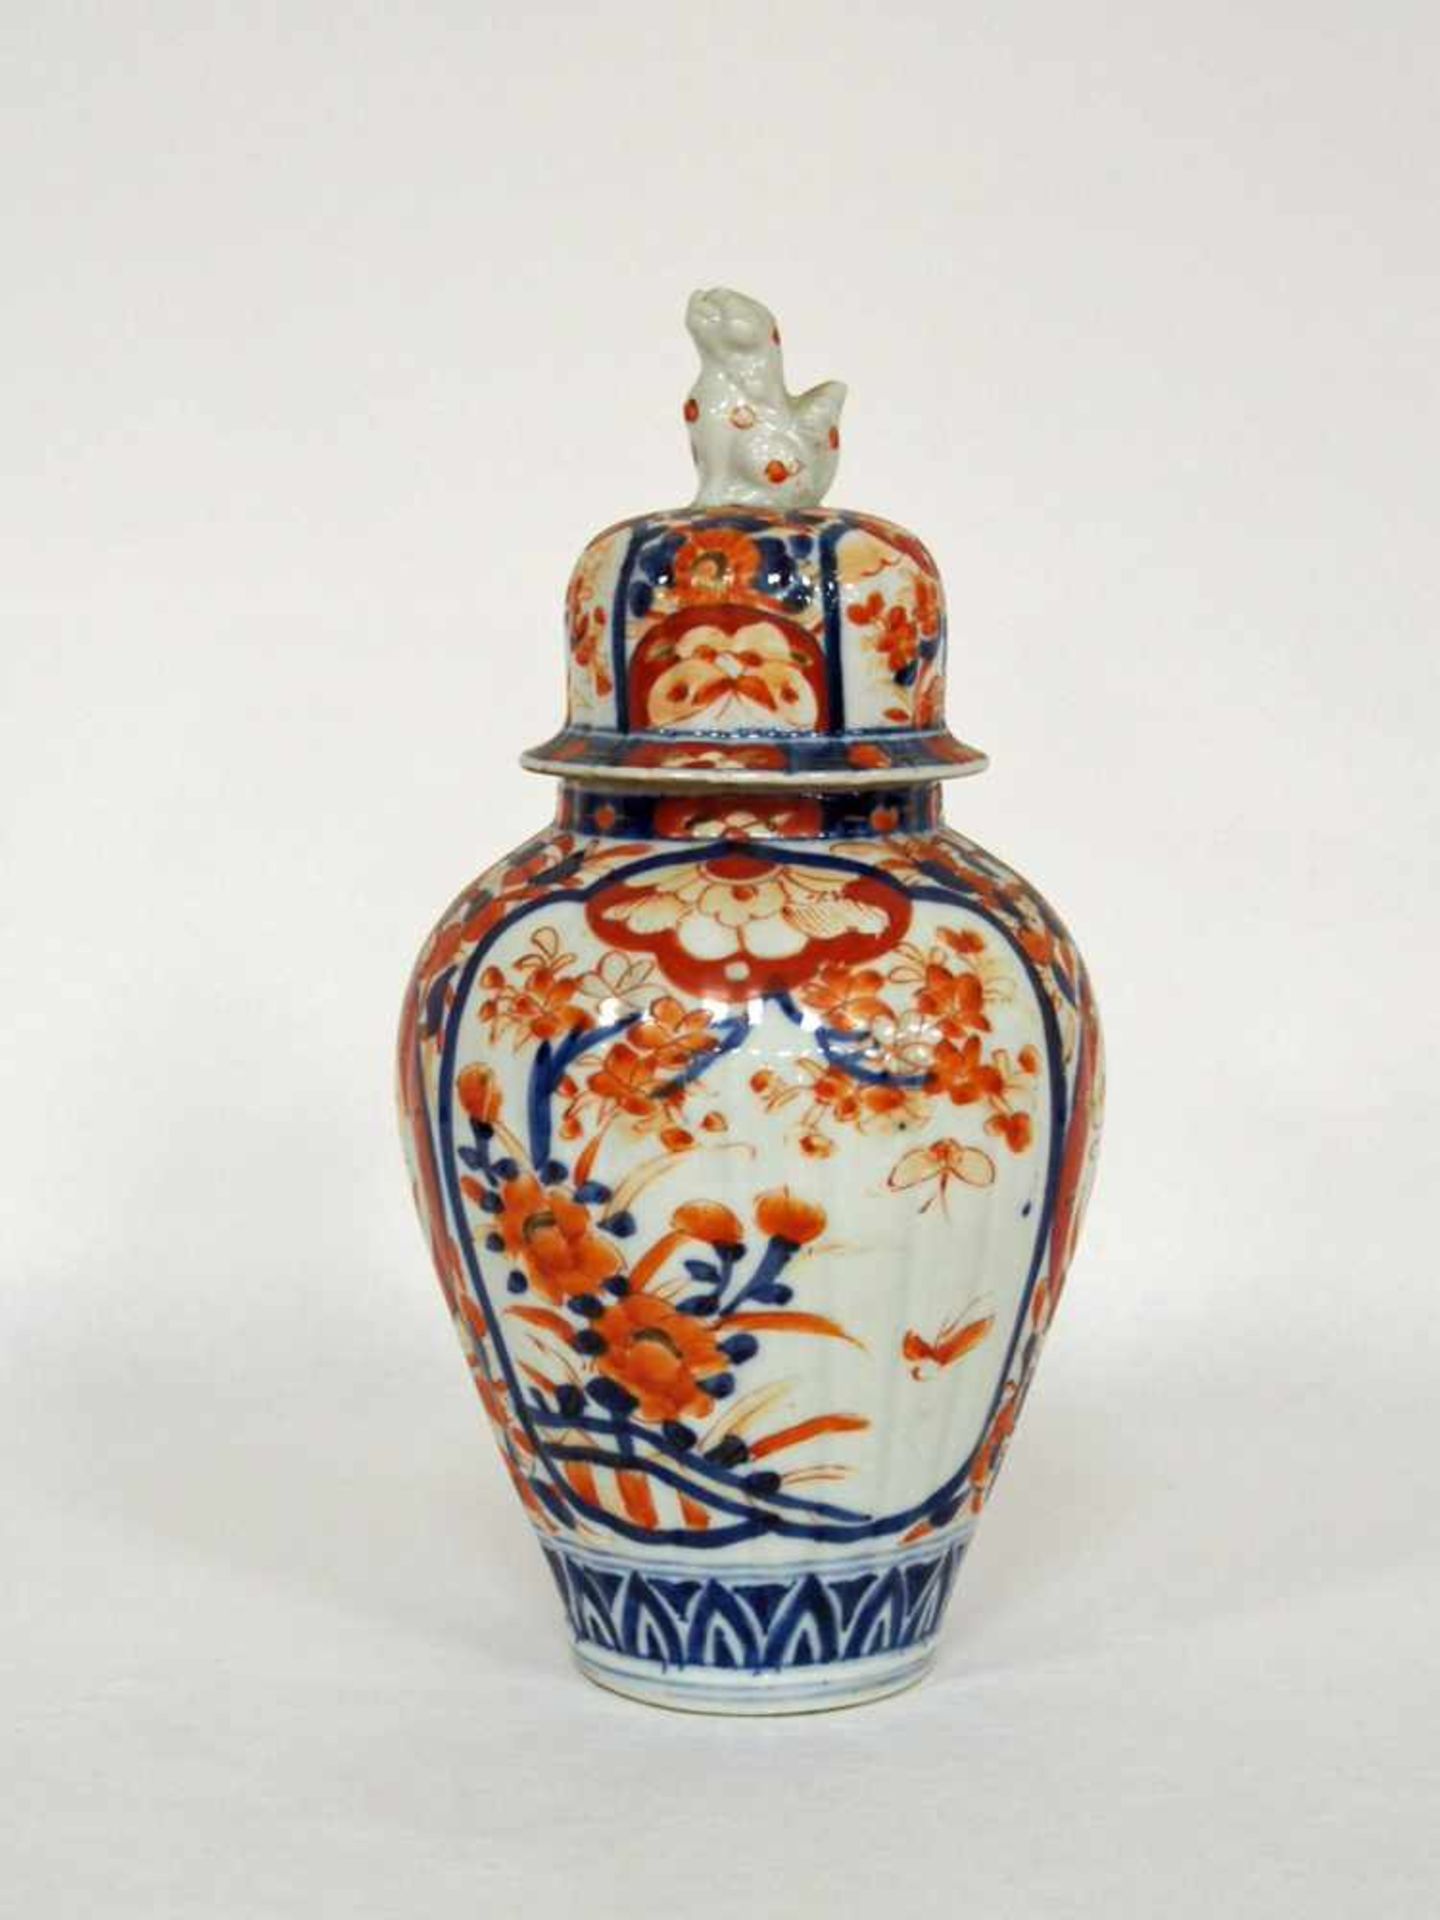 DeckelvasePorzellan, Imari Dekor, China um 1900, Höhe 30 cm- - -25.00 % buyer's premium on the